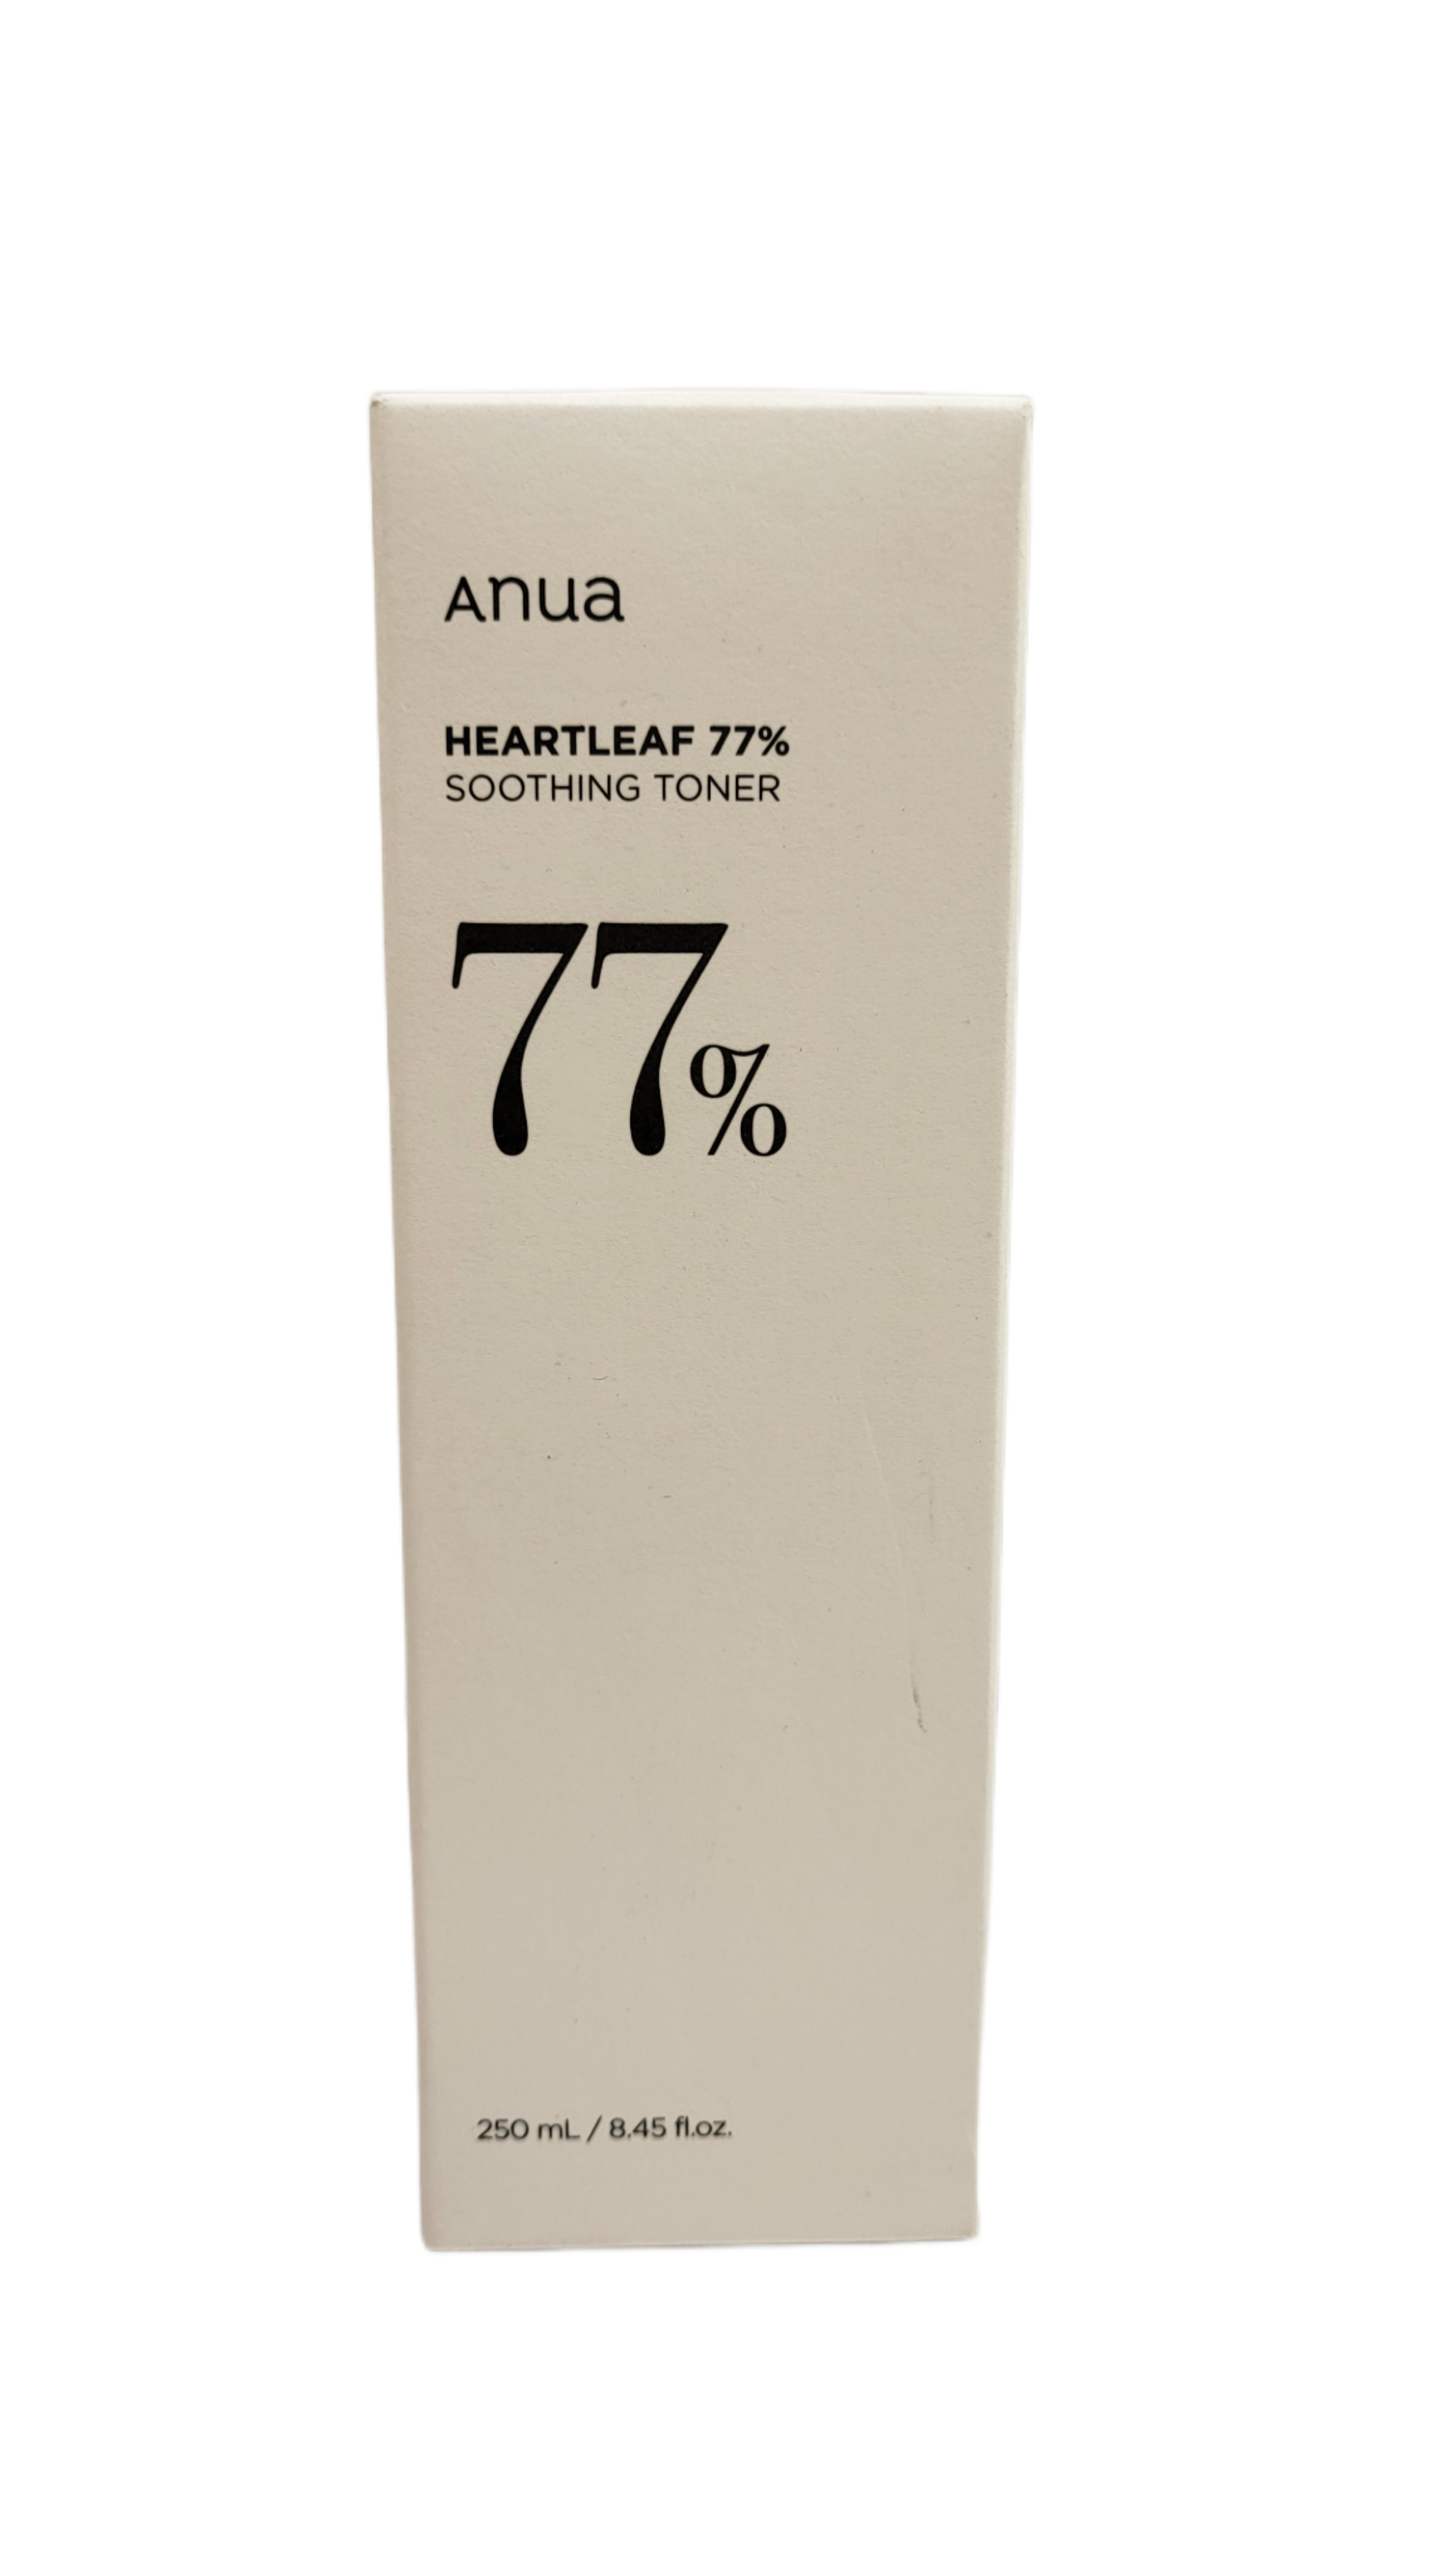 ANUA Heartleaf 77% Soothing Toner 250ml